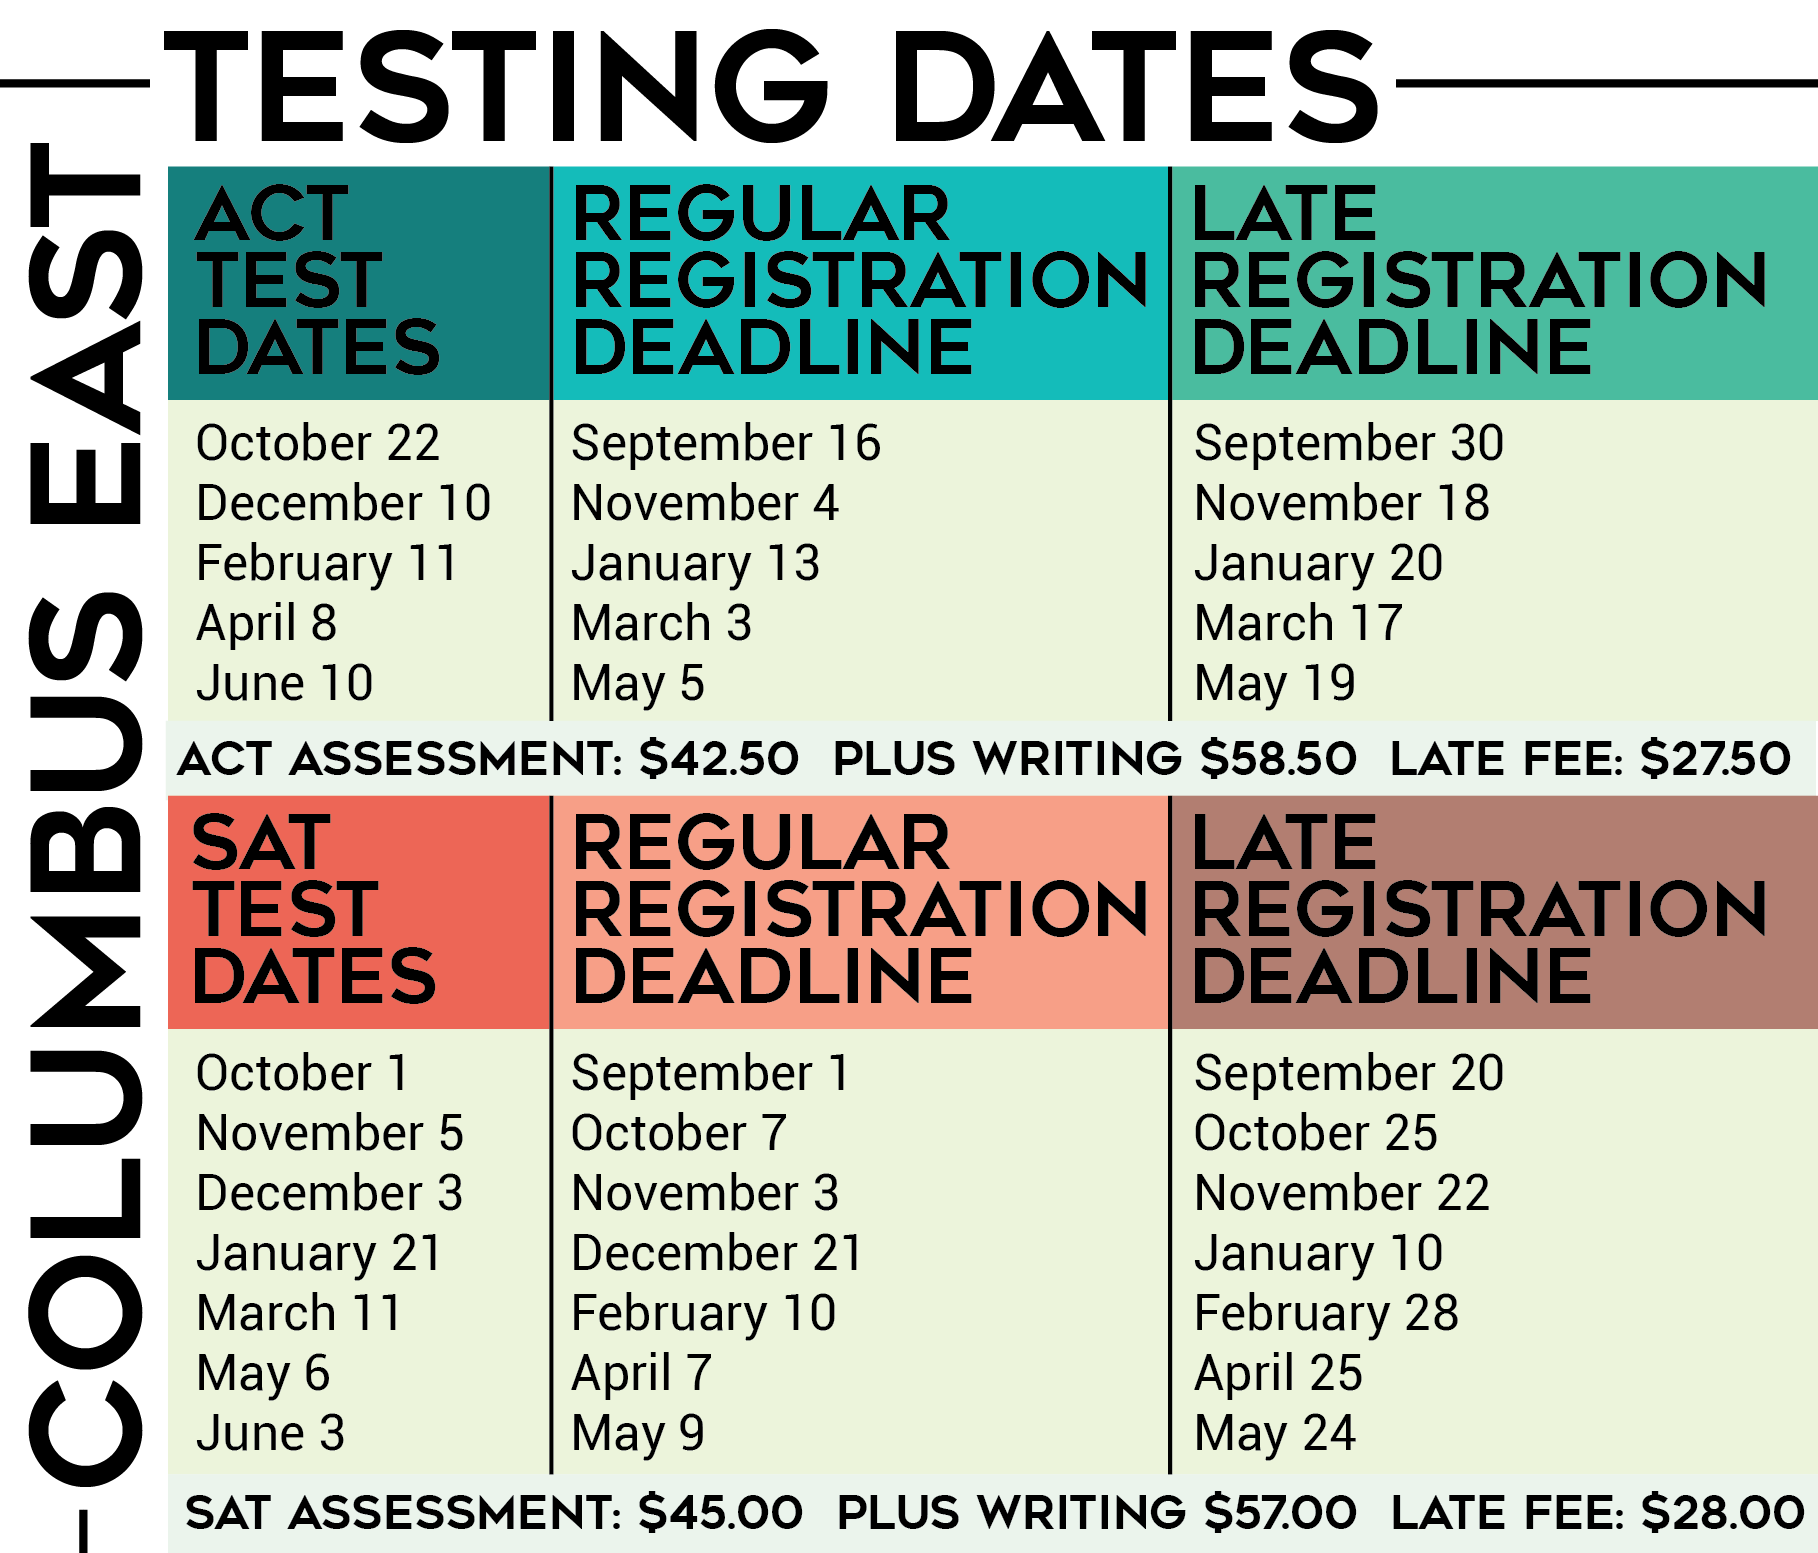 East Testing Dates CEHS News